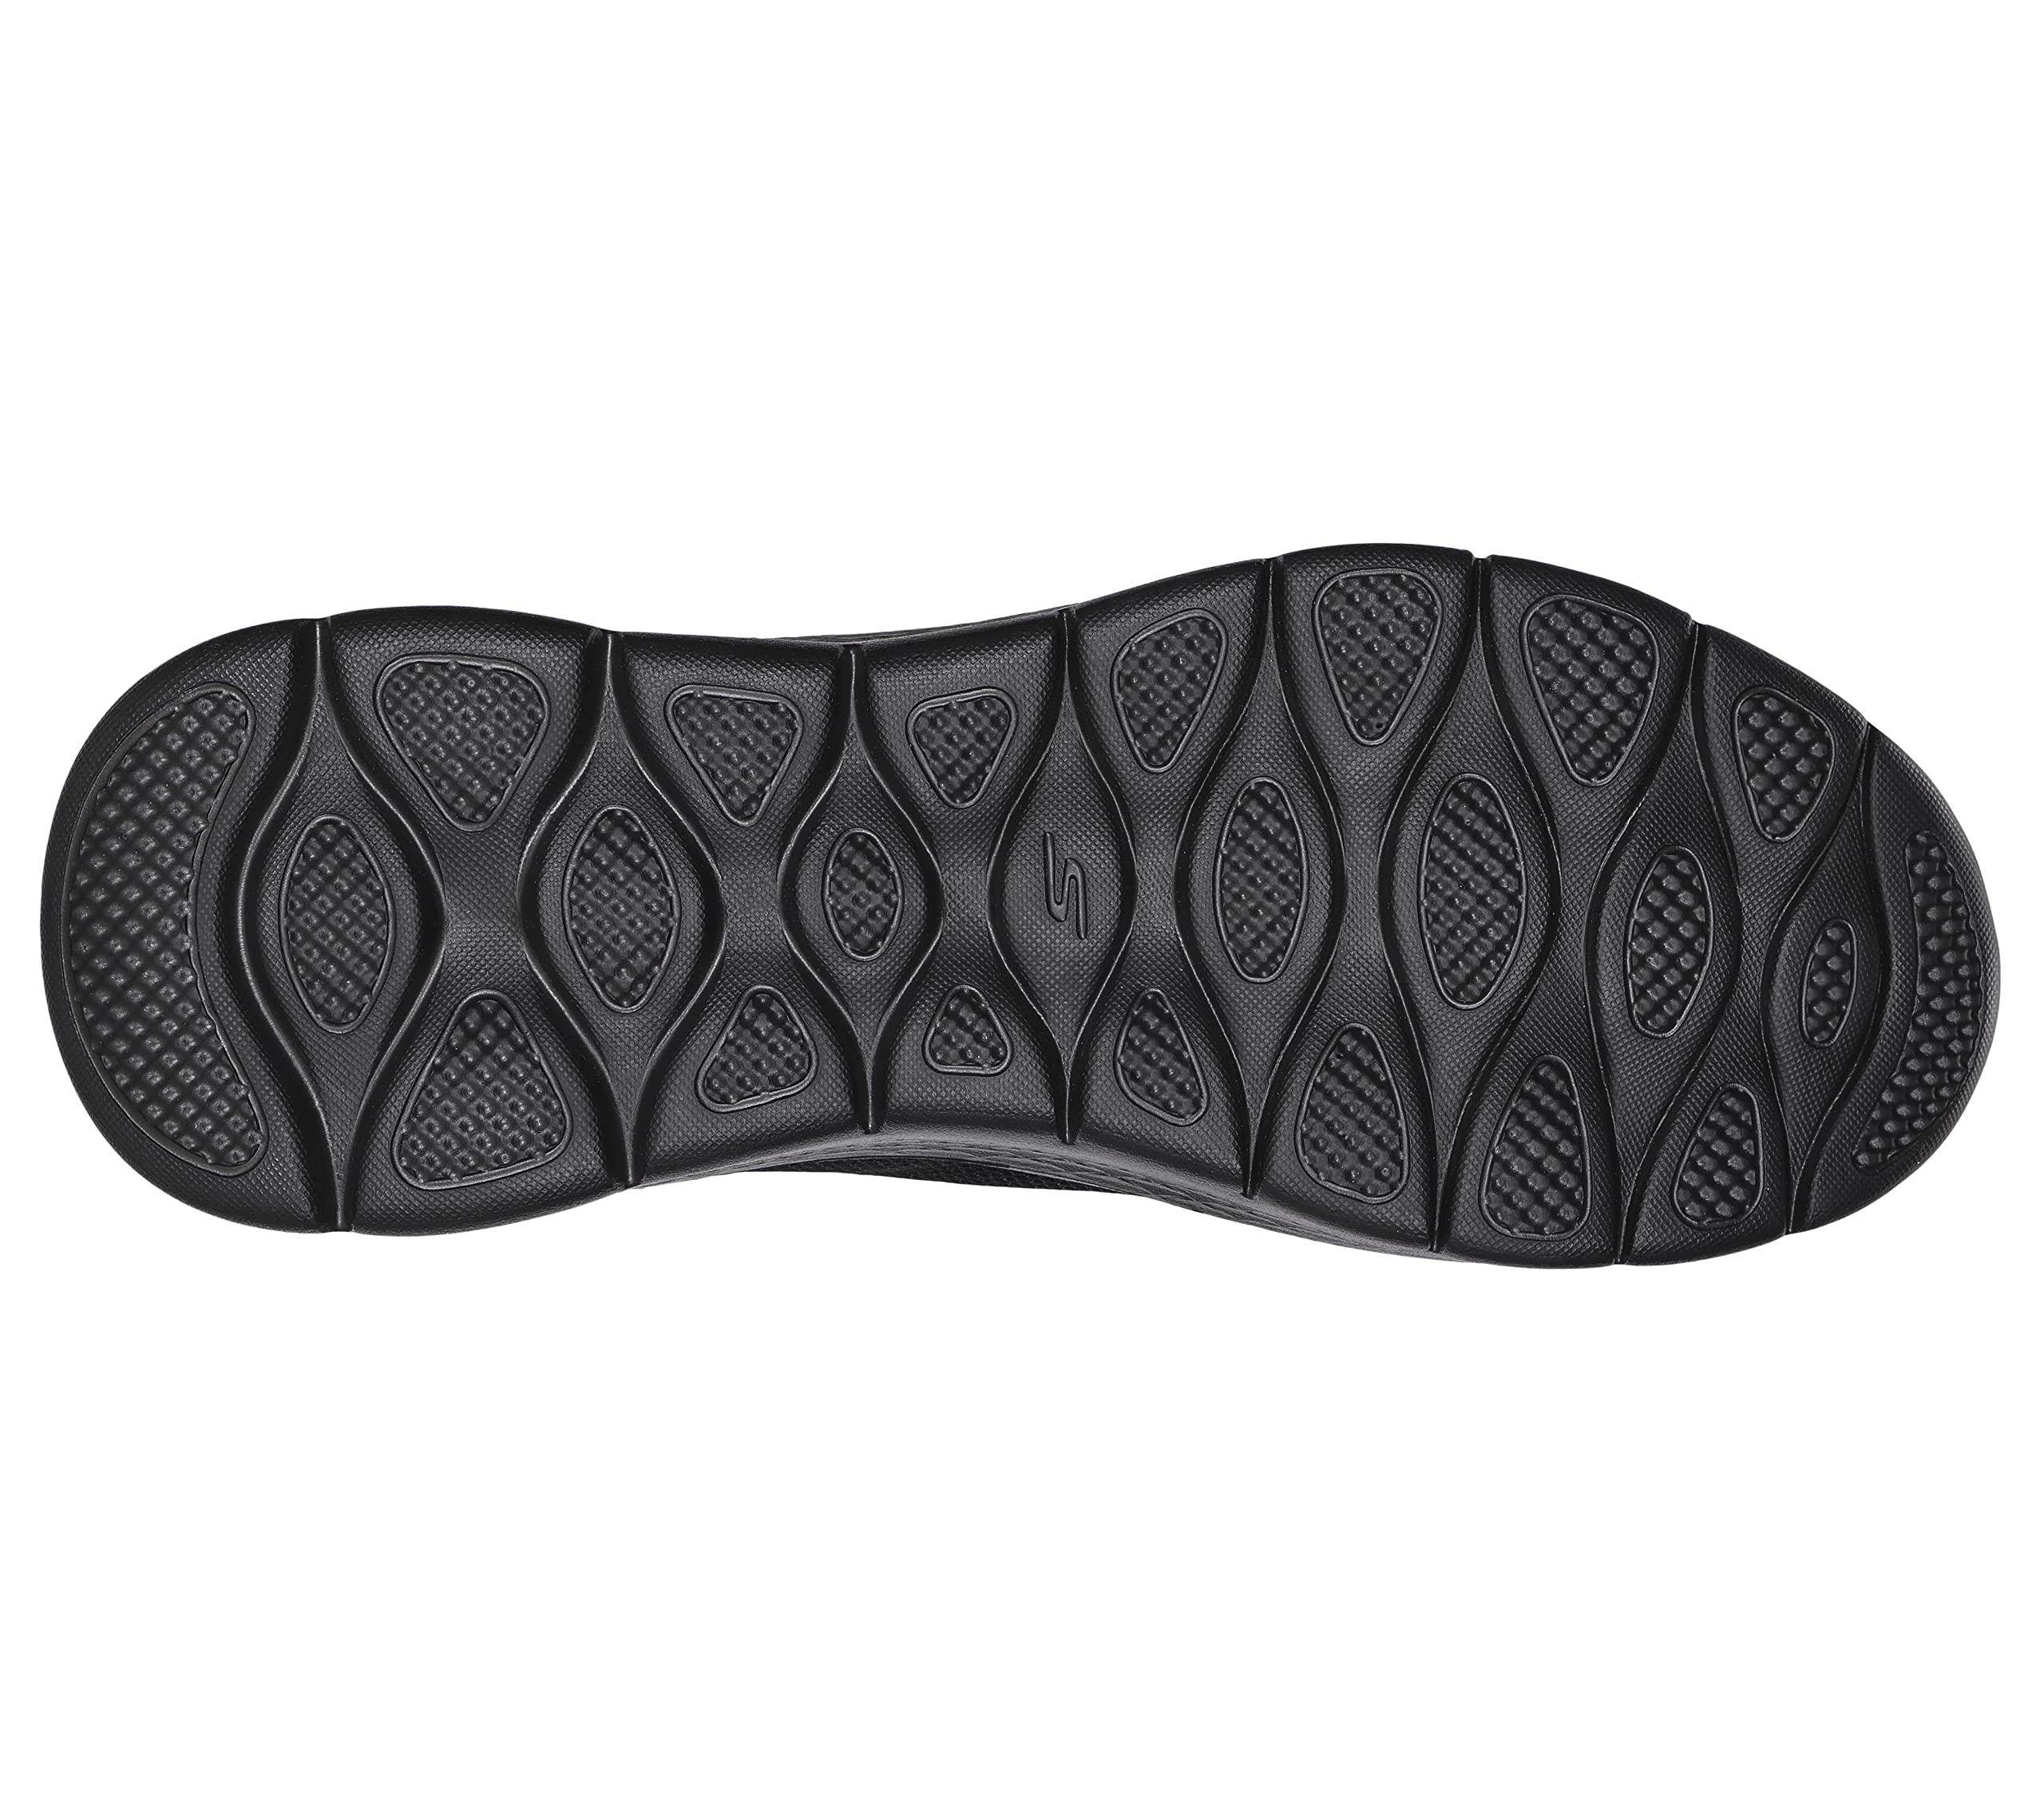 Skechers Men's Gowalk Flex Slip-Ins-Athletic Slip-On Casual Walking Shoes | Air-Cooled Memory Foam Sneaker, Black, 12.5